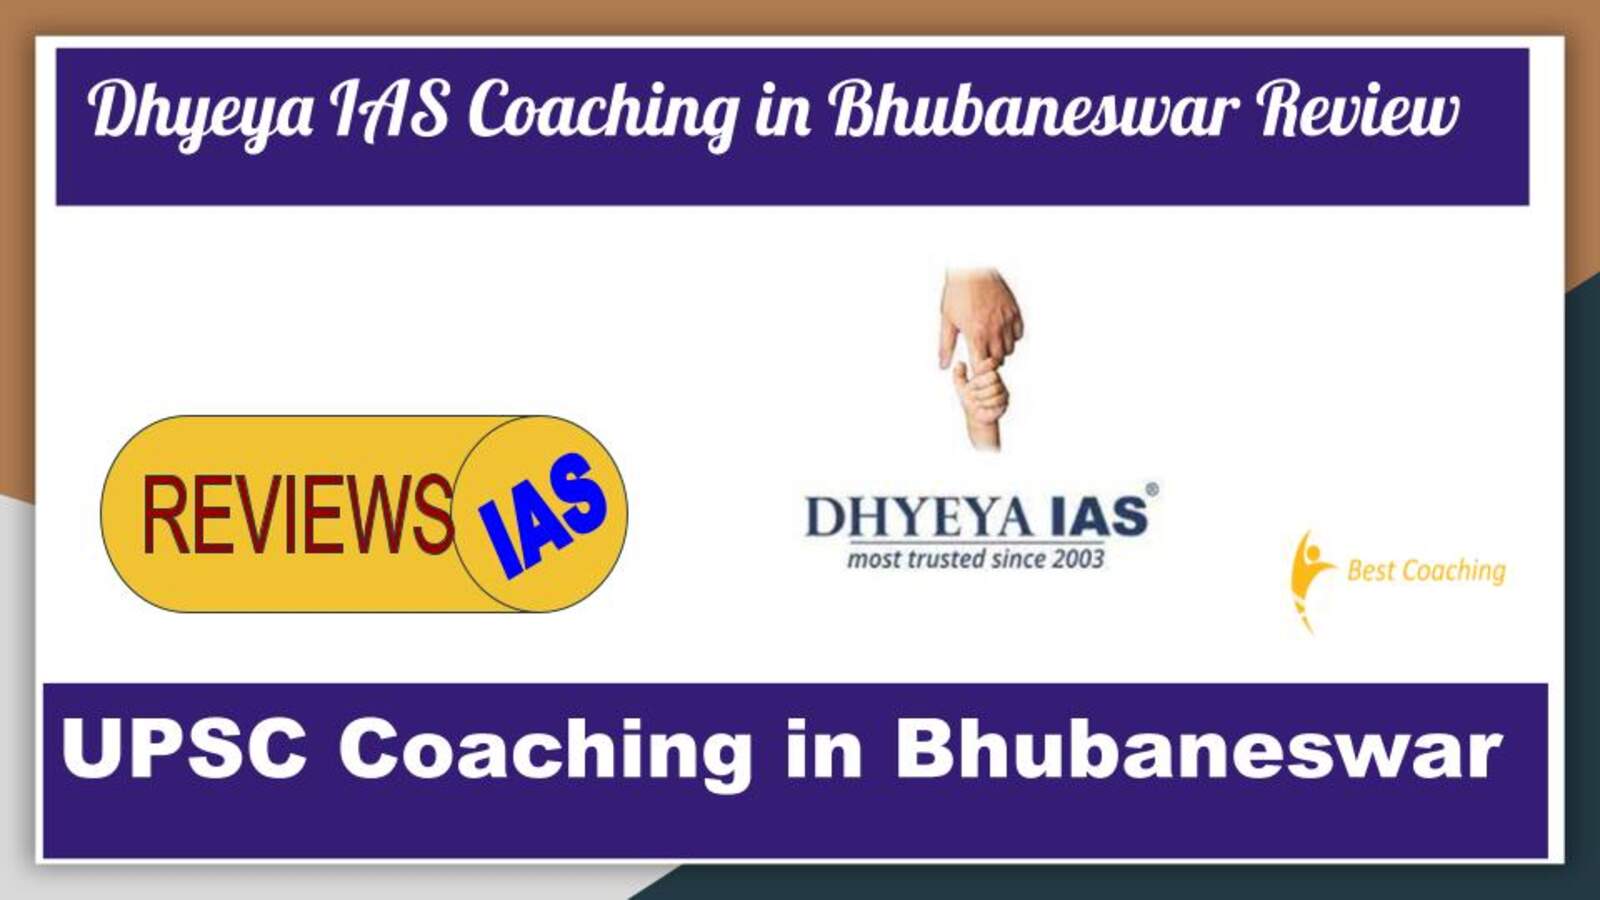 Dhyeya IAS coaching in Bhubaneswar